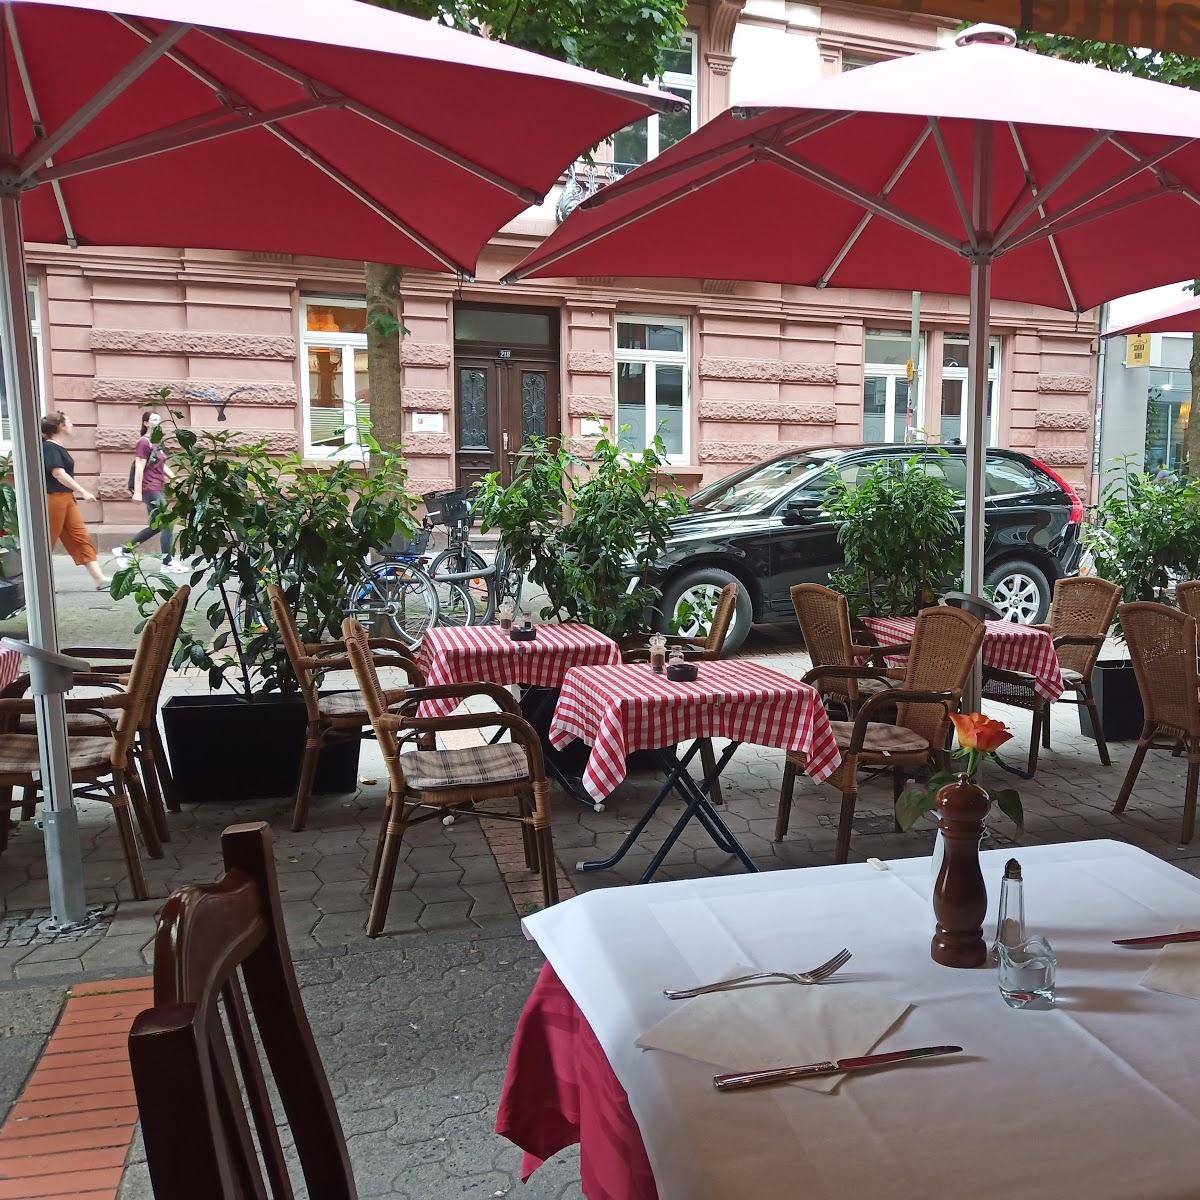 Restaurant "Ristorante Il Gambero" in Frankfurt am Main